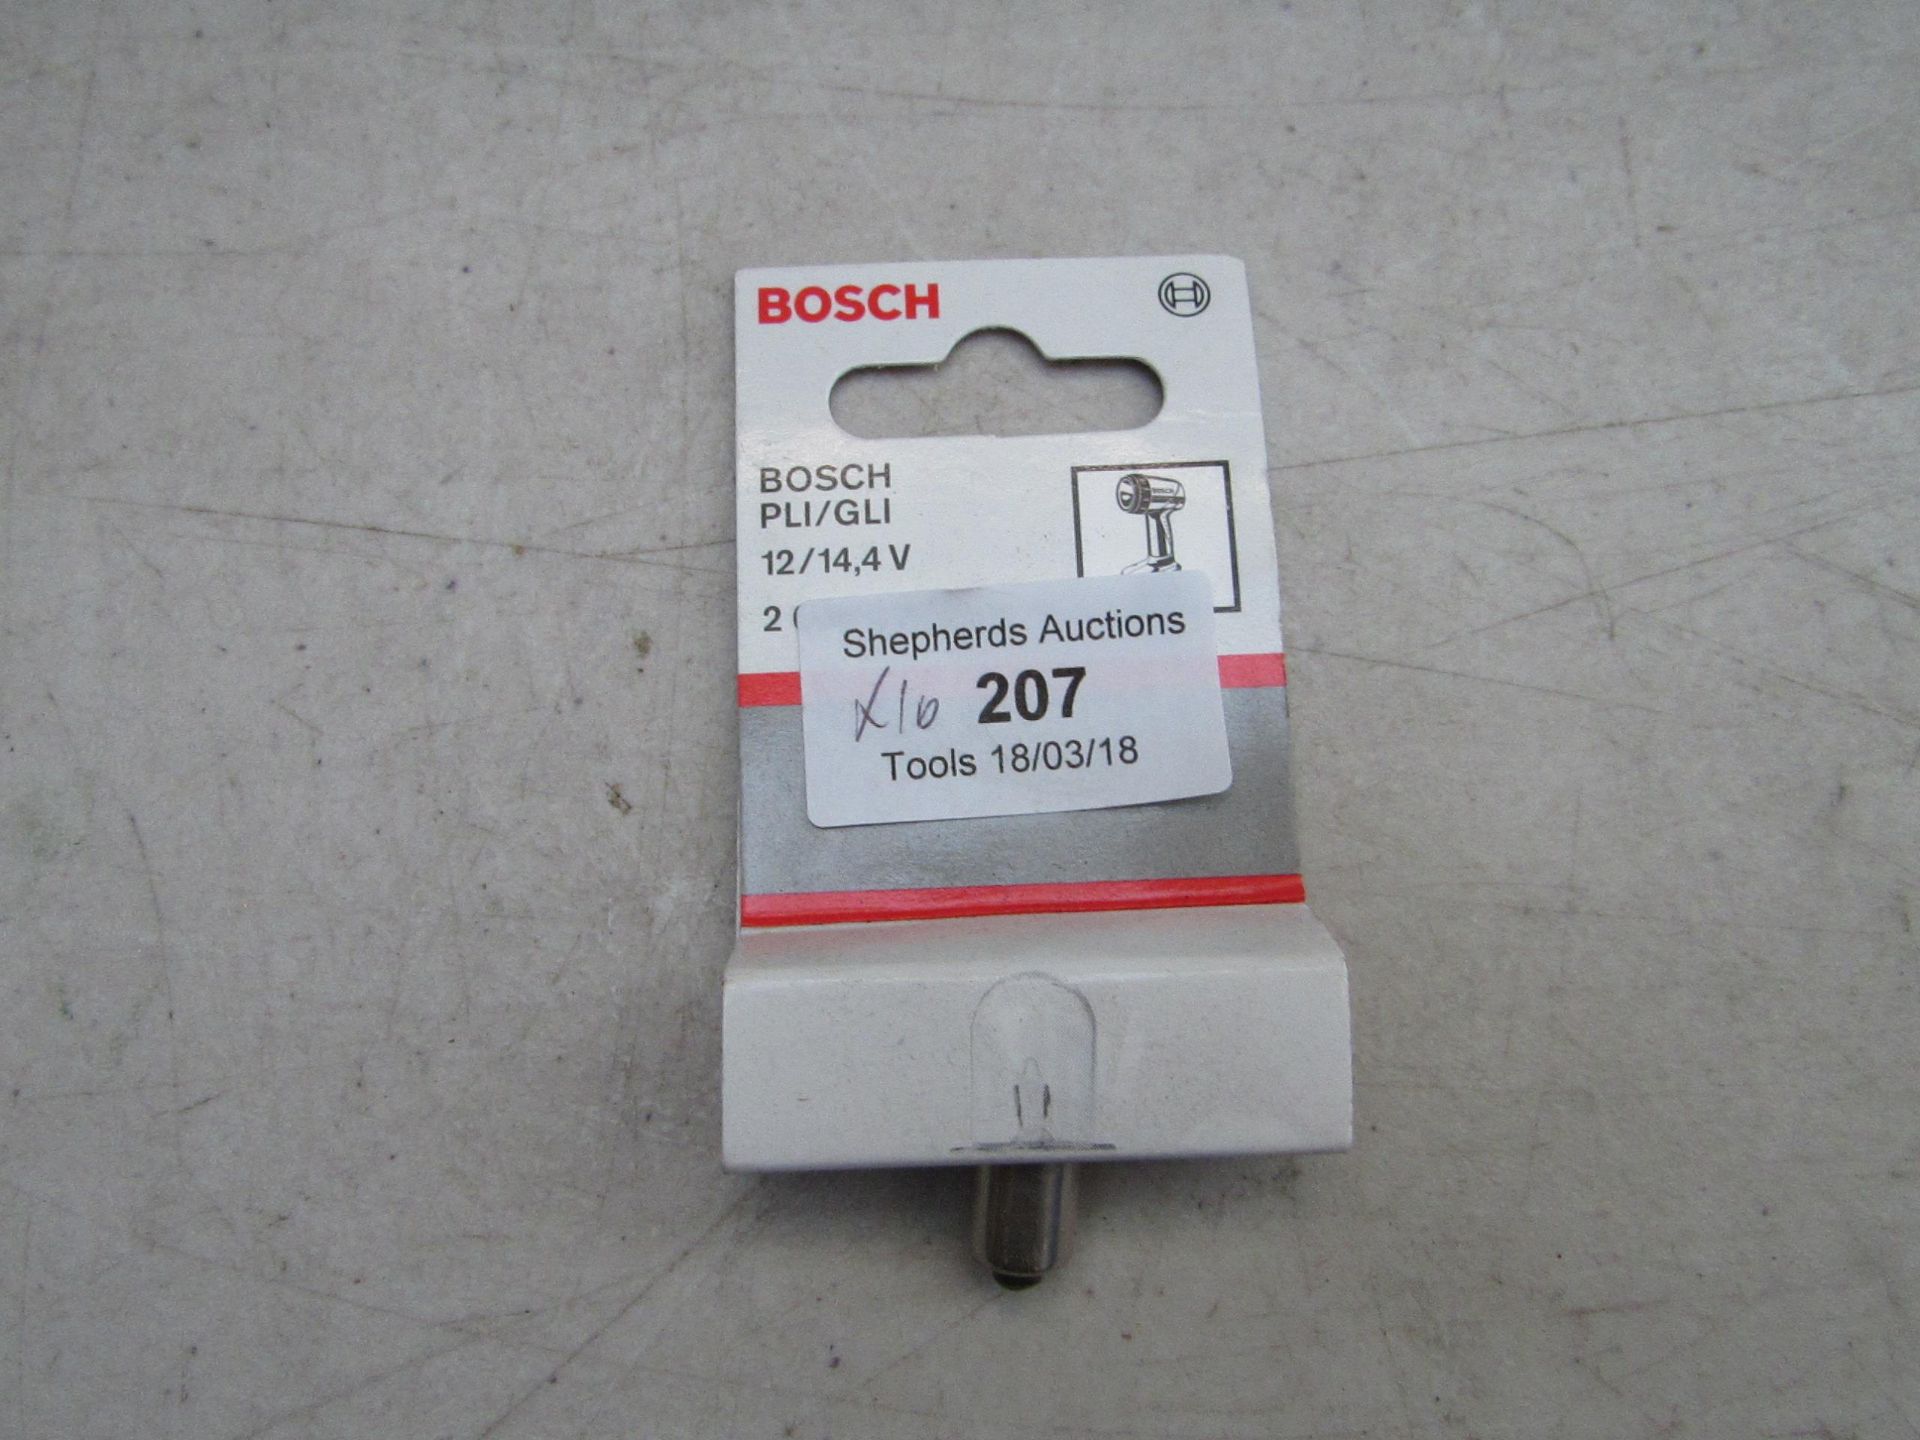 10x Bosch drill bulbs, 12/14,4v, all unchecked